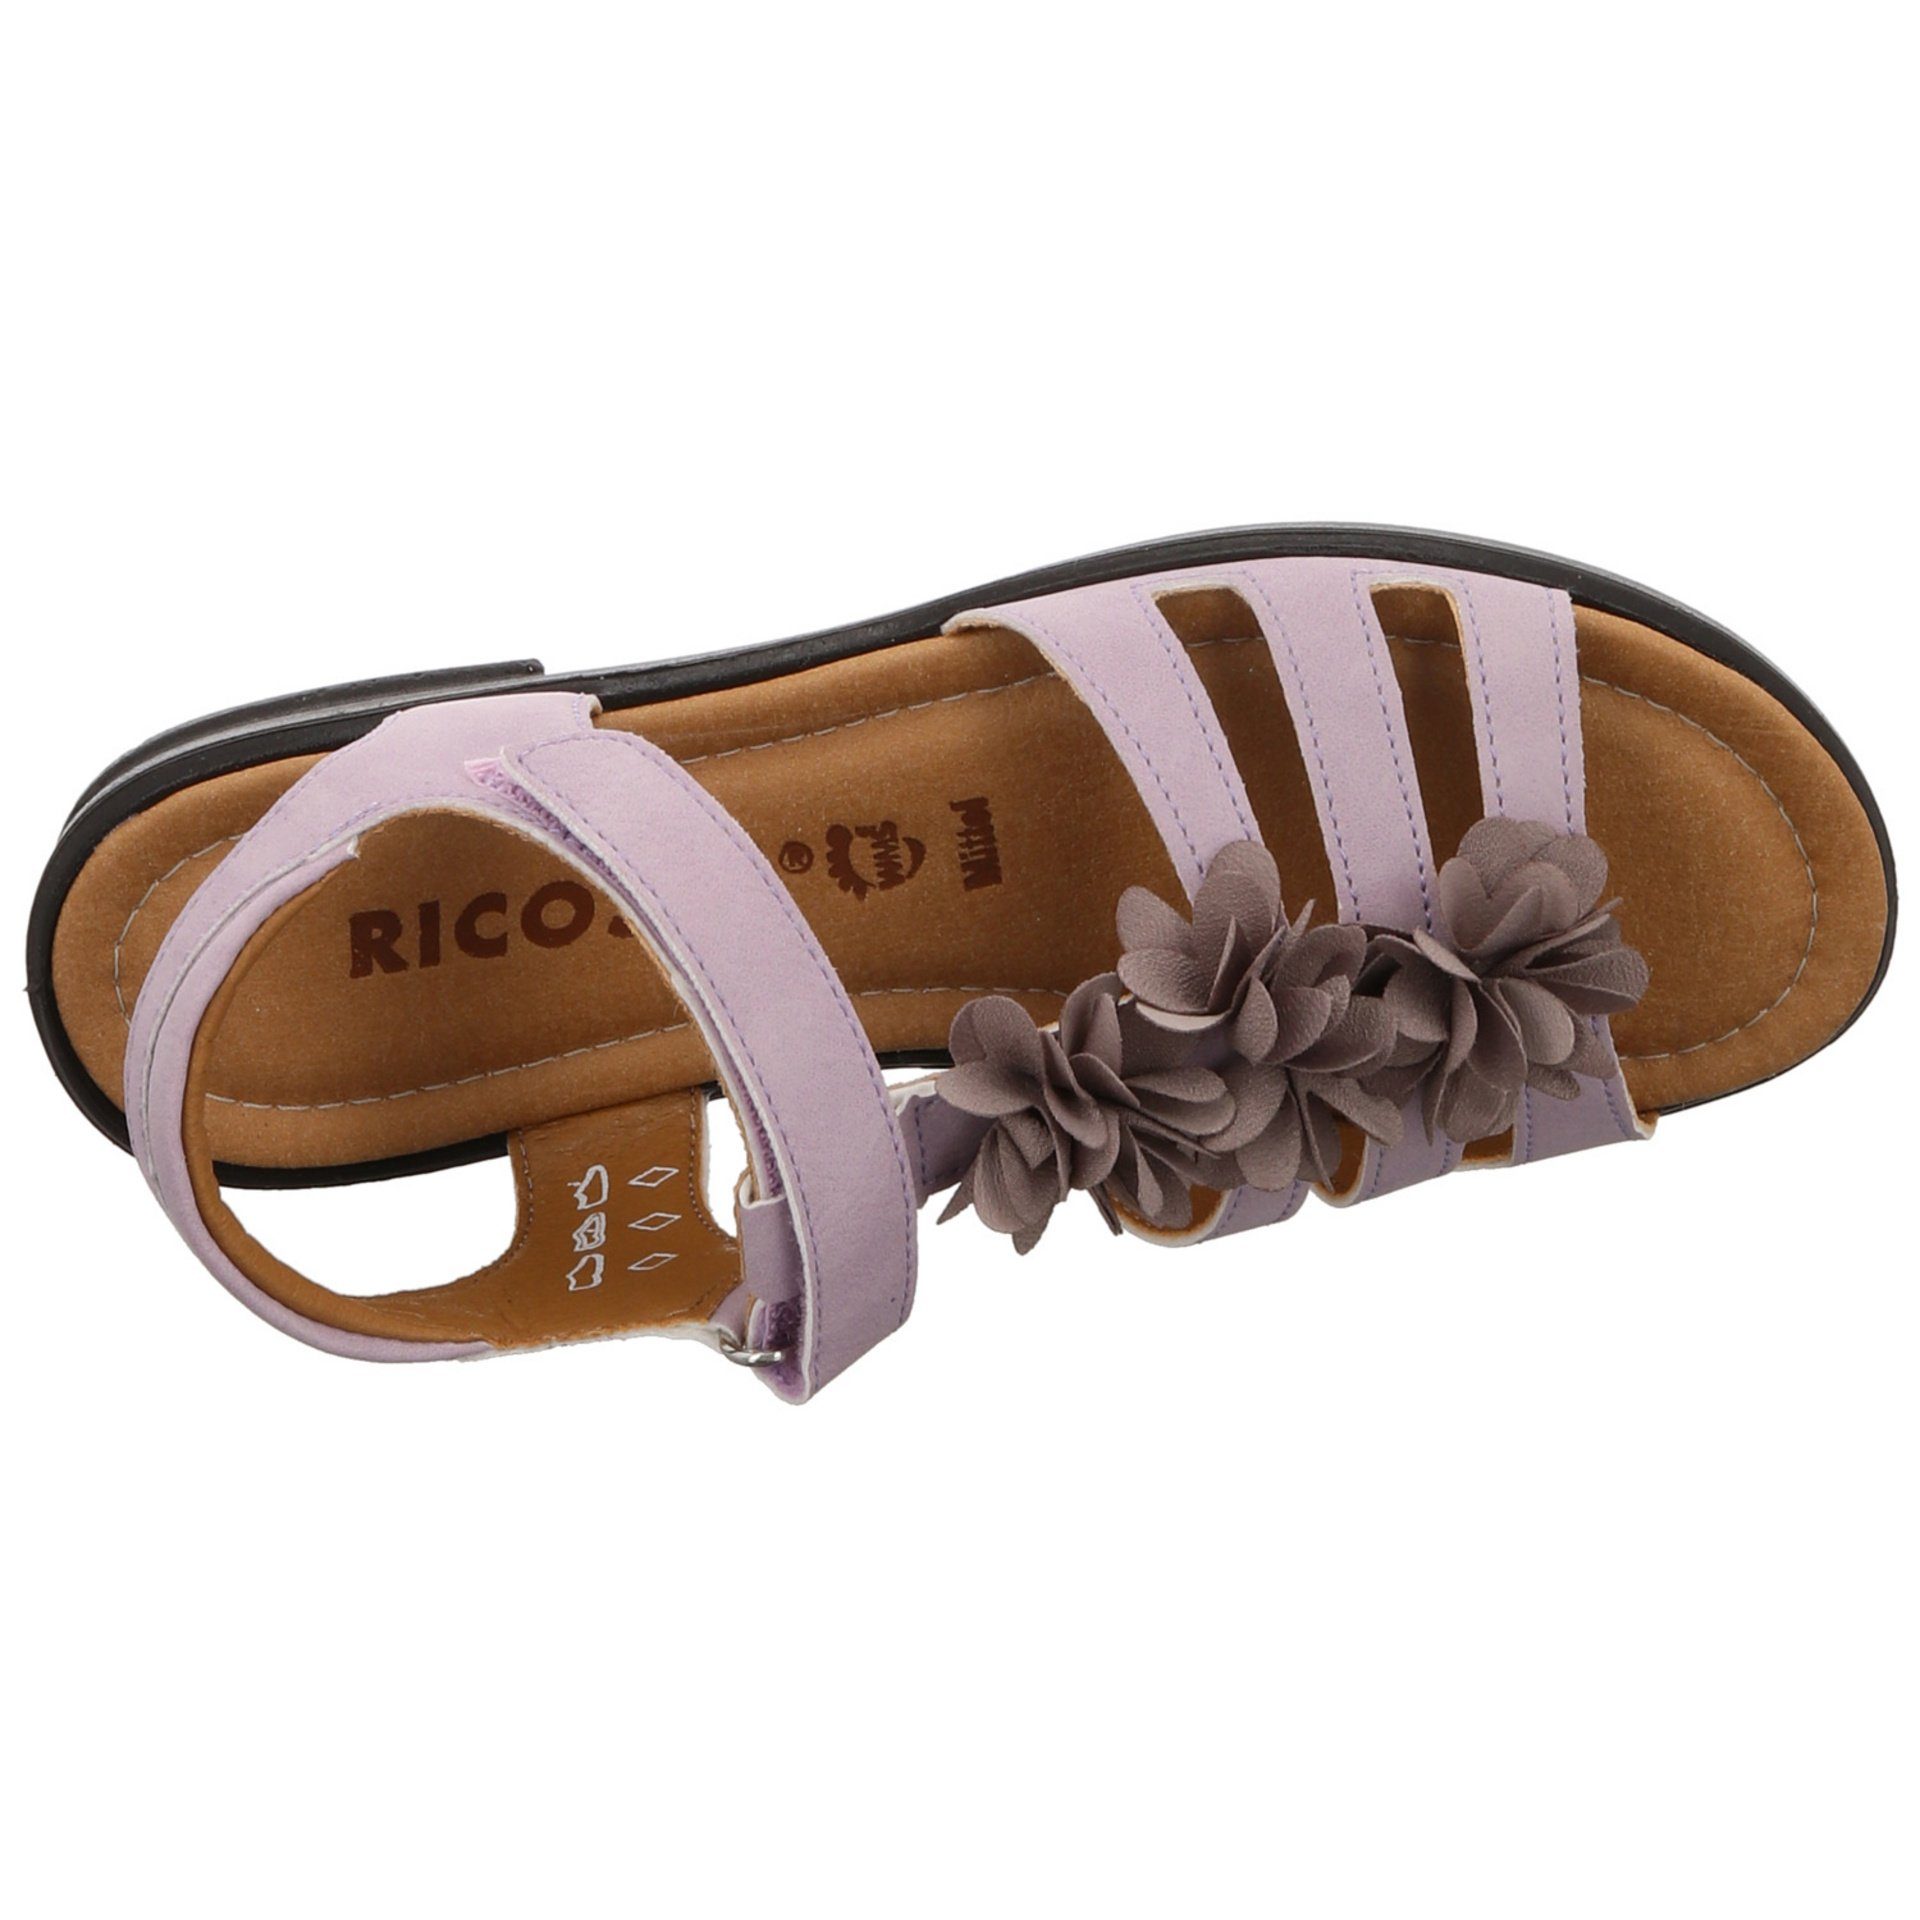 Schuhe Sandale Synthetik Mädchen Sandalen hell Ricosta Sandale Aurora rot+lila